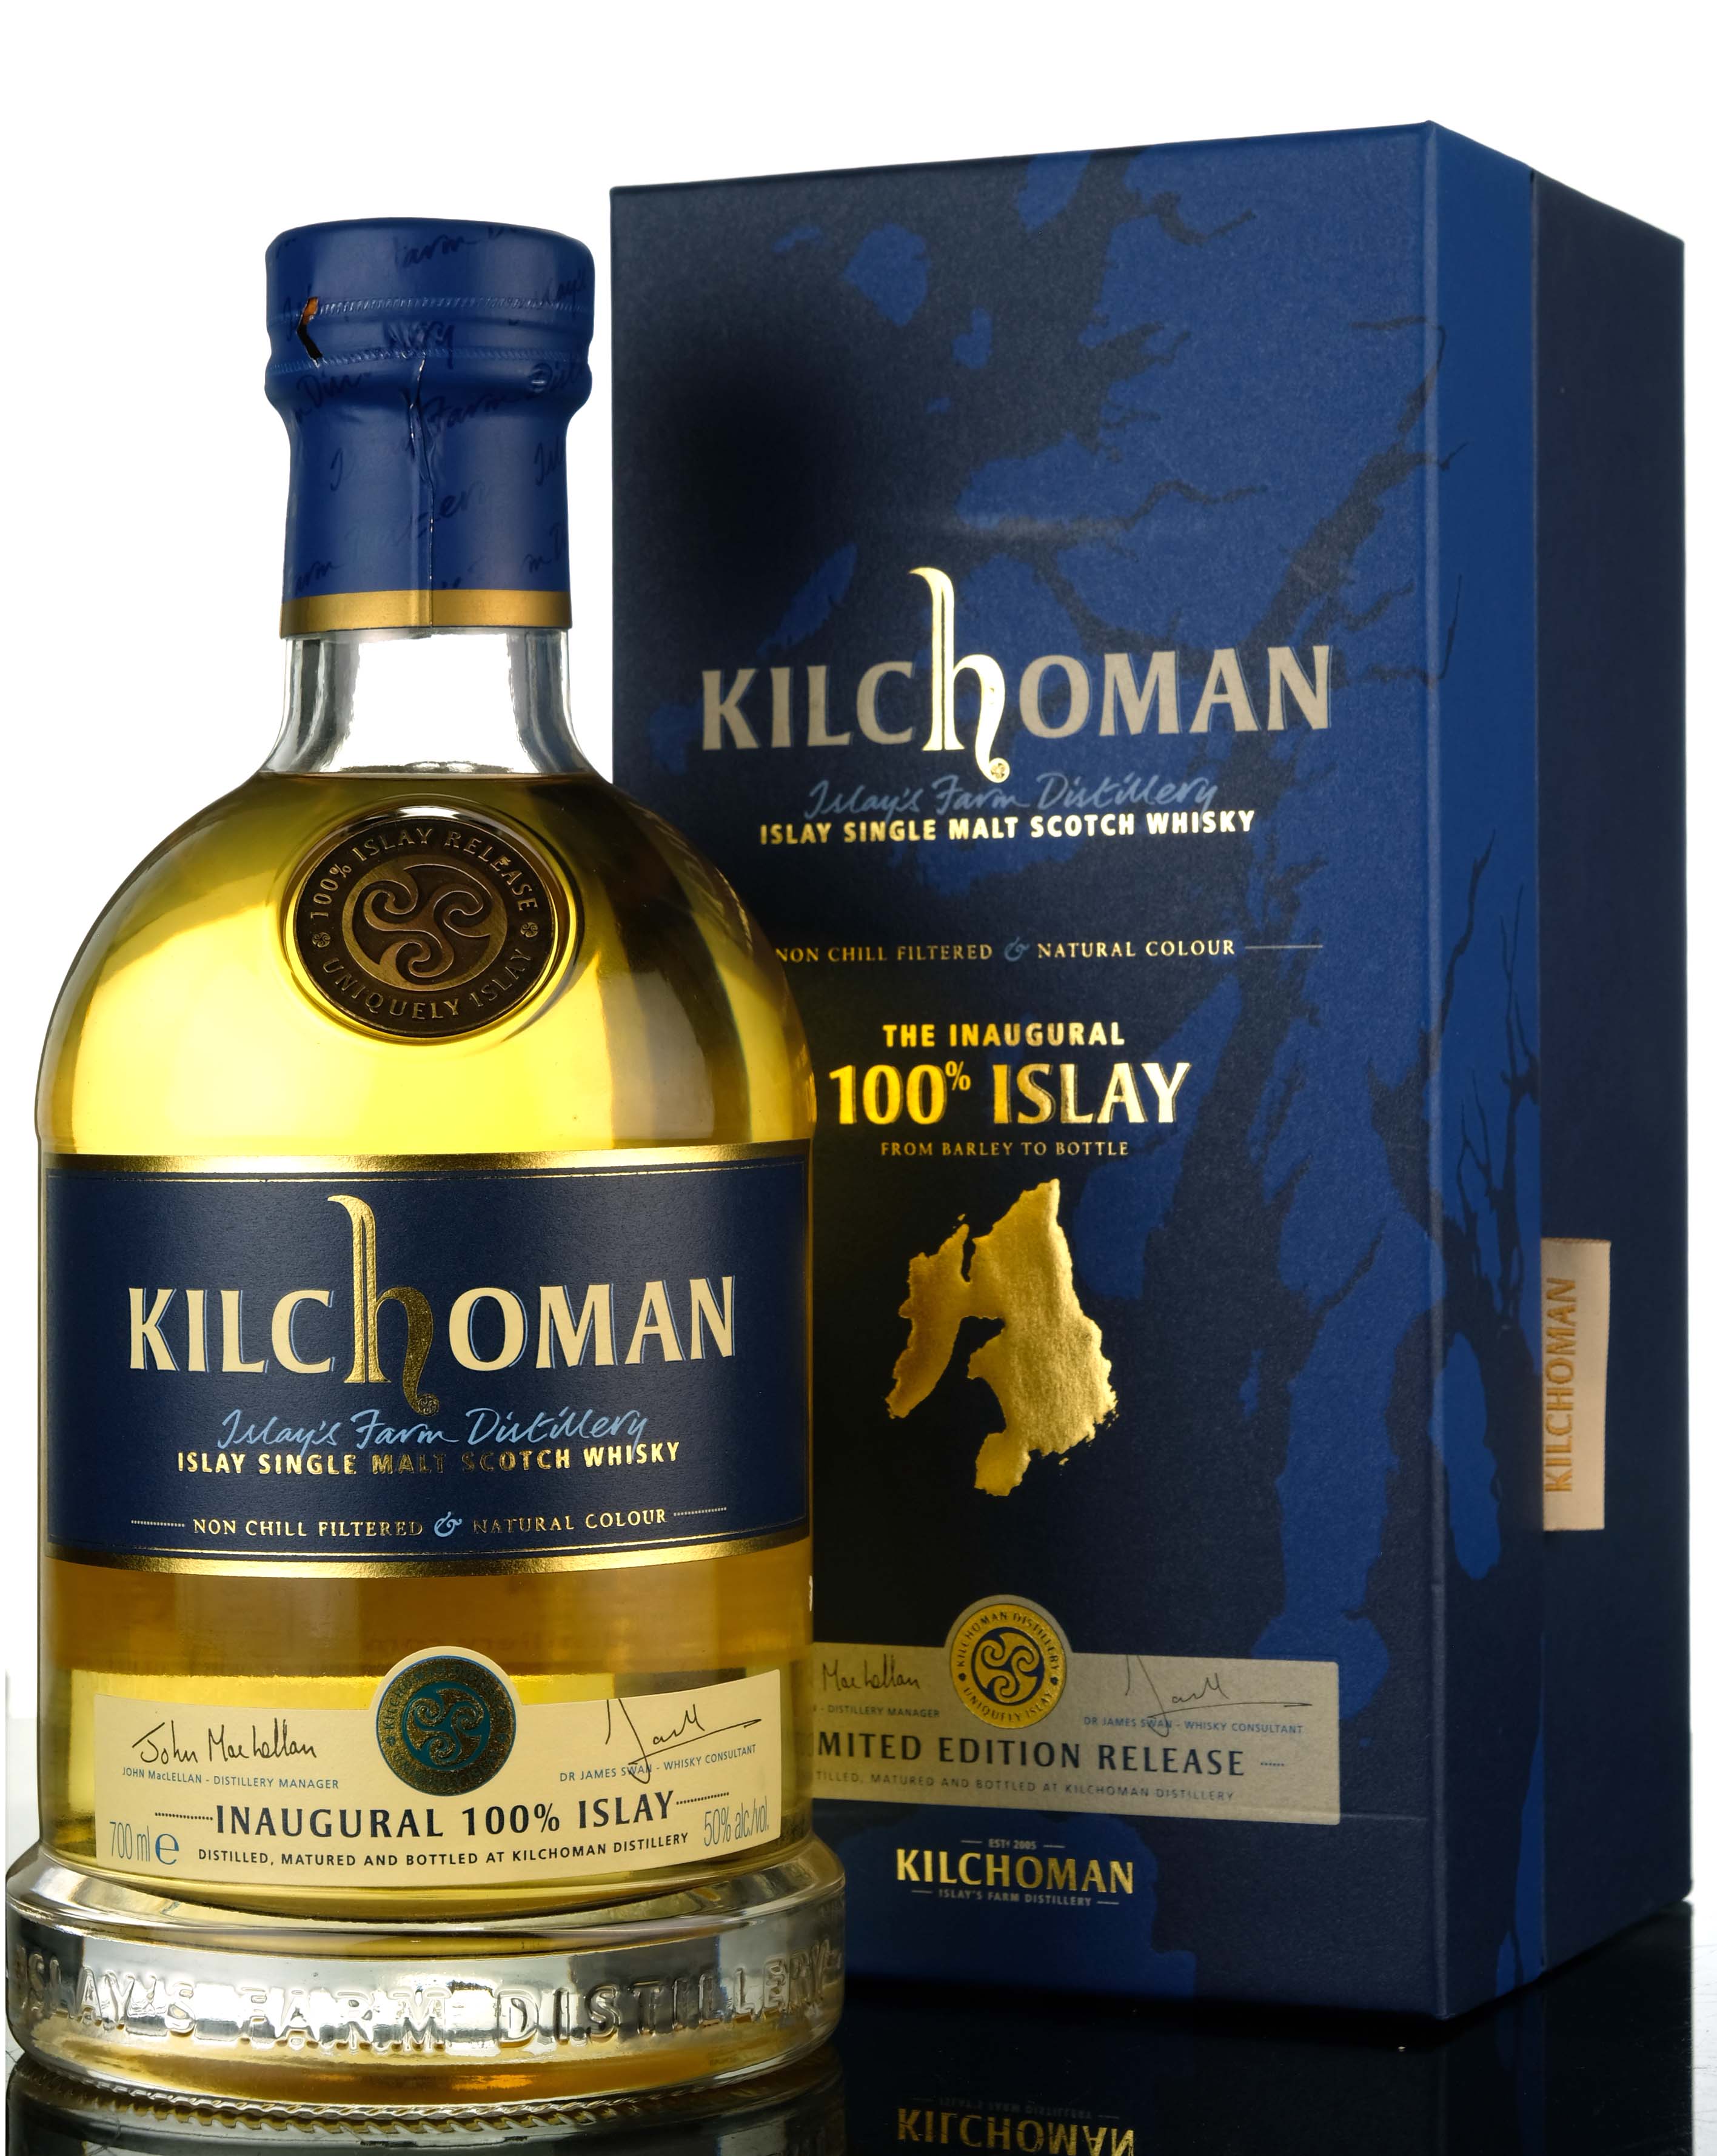 Kilchoman Inaugural 100% Islay - 2011 Release